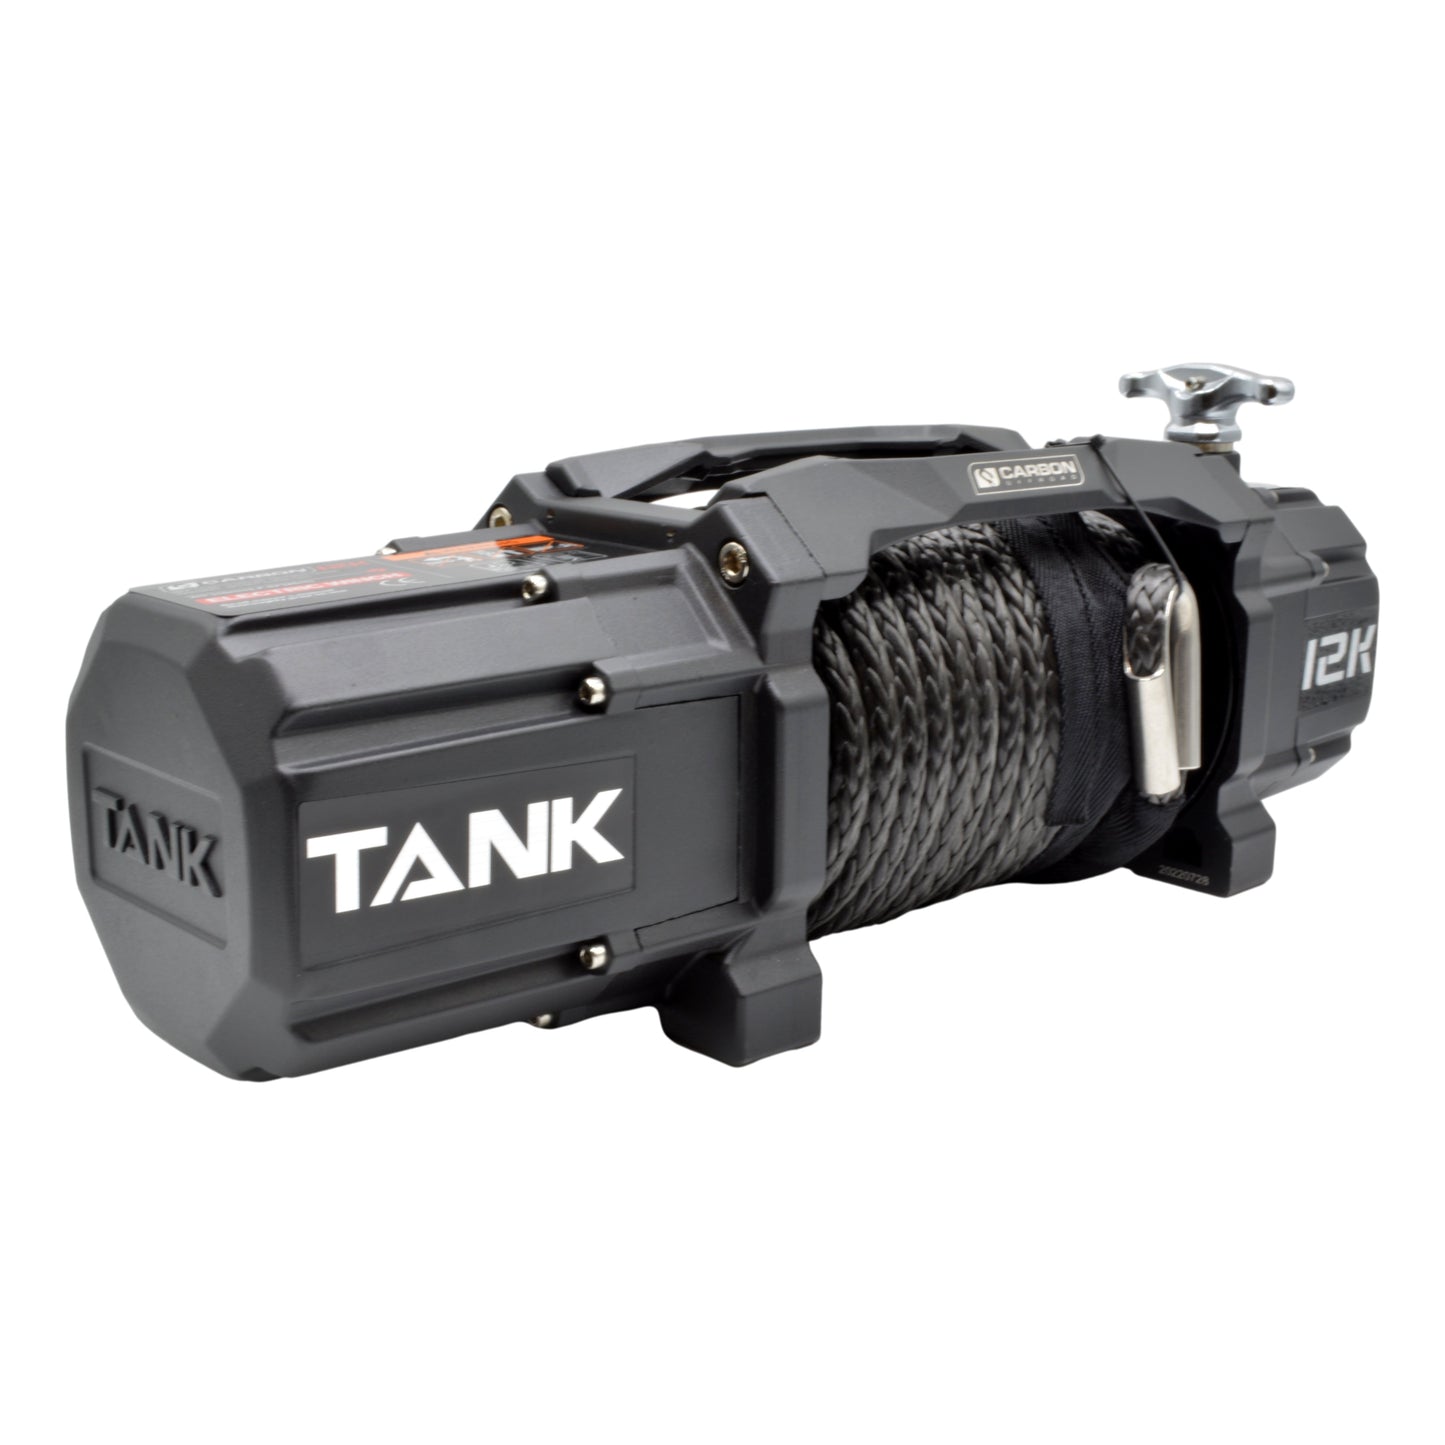 Carbon Tank 12000lb 4x4 Winch Kit IP68 12V - CW-TK12 4